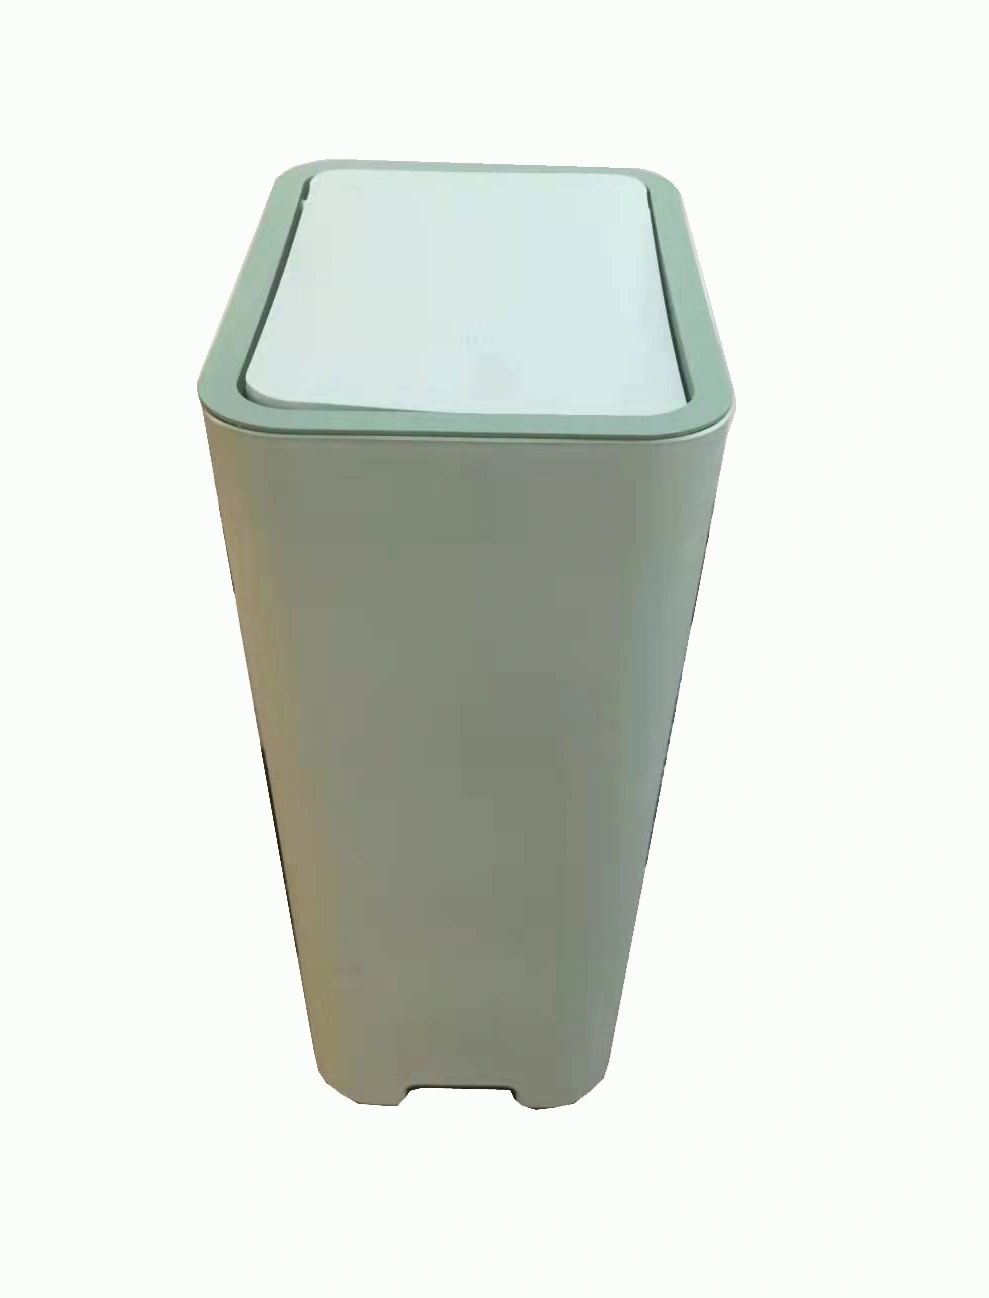 Square plastic trash bin with lid